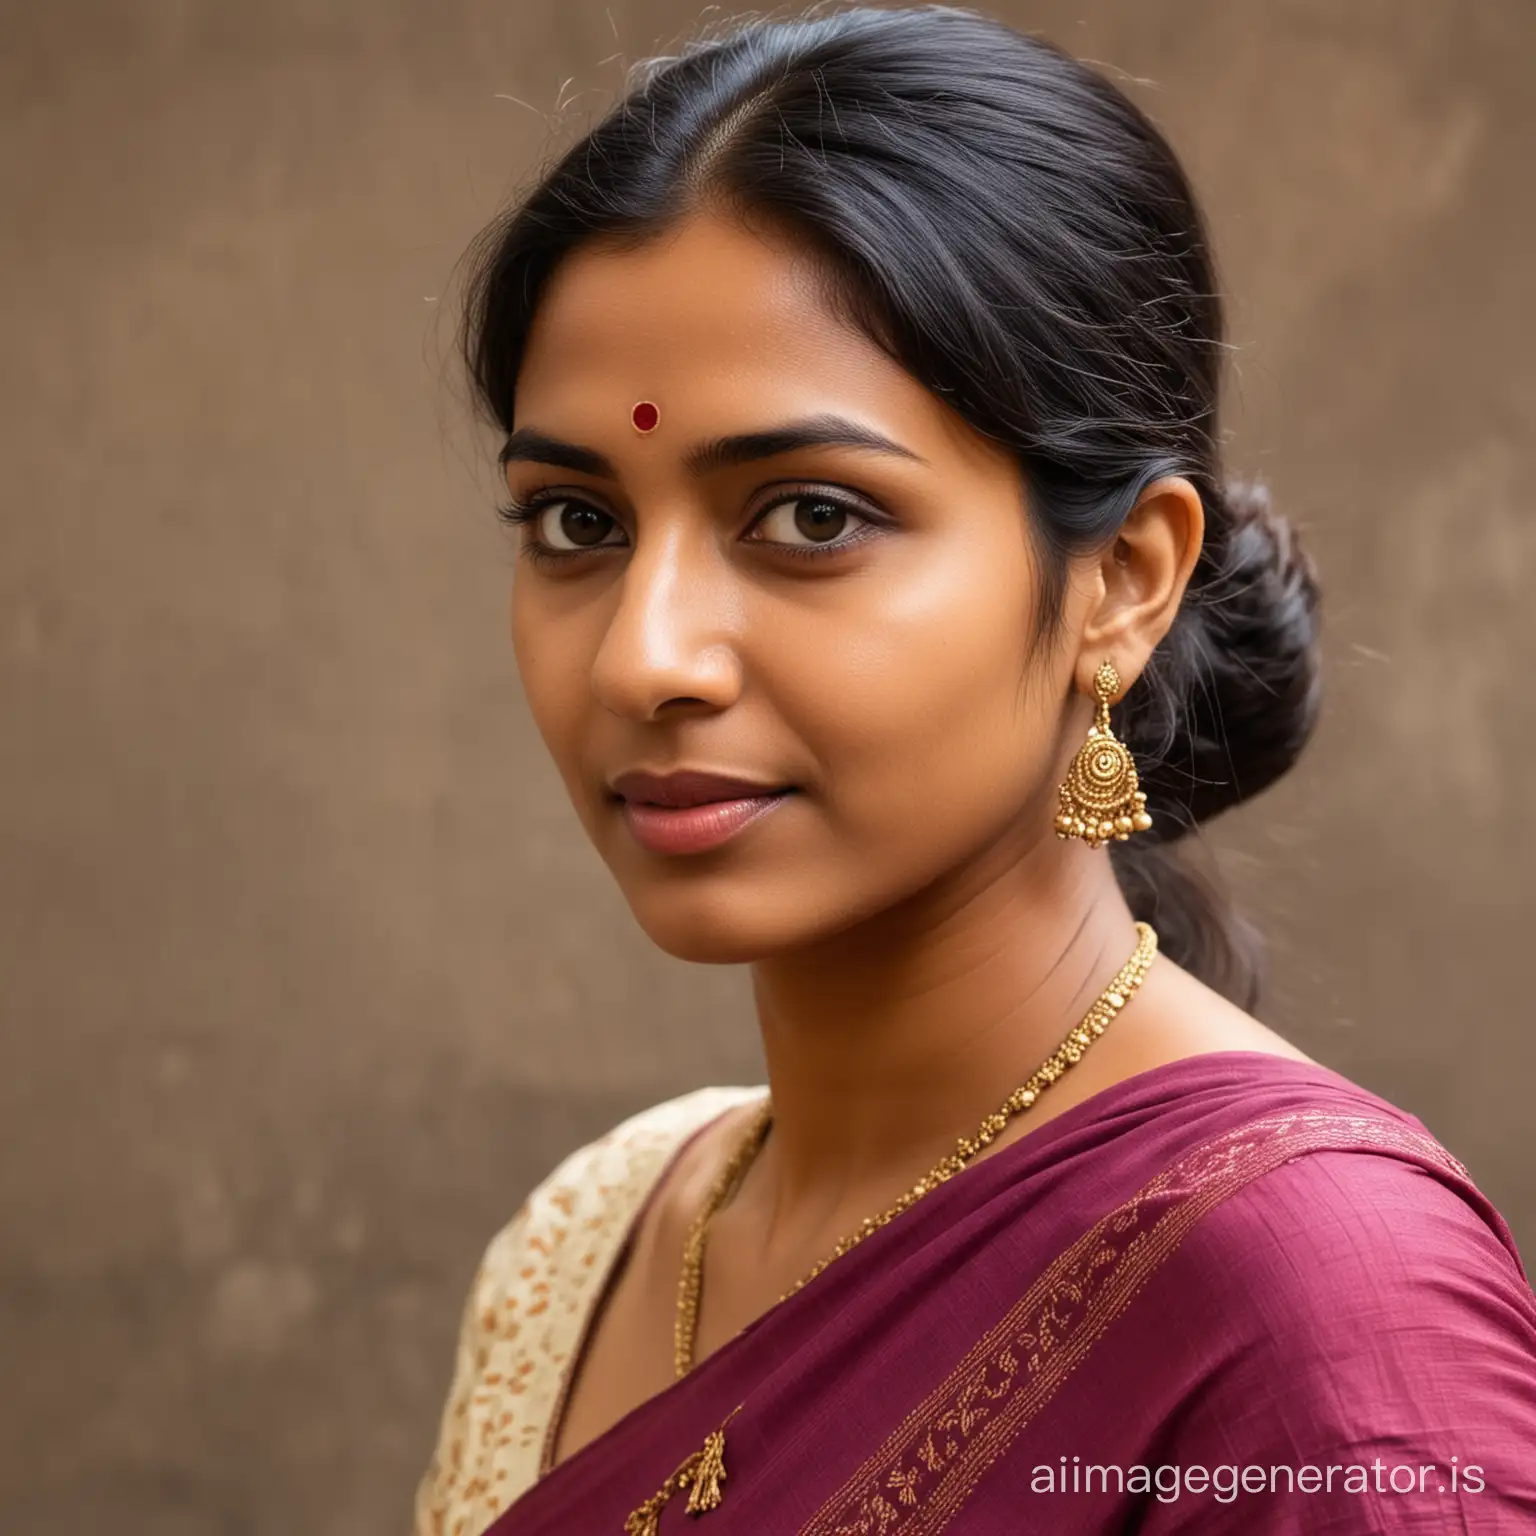  East Indian Woman from Bombay, Bassein, Konkani, Marathi, HD, 4k, 8k